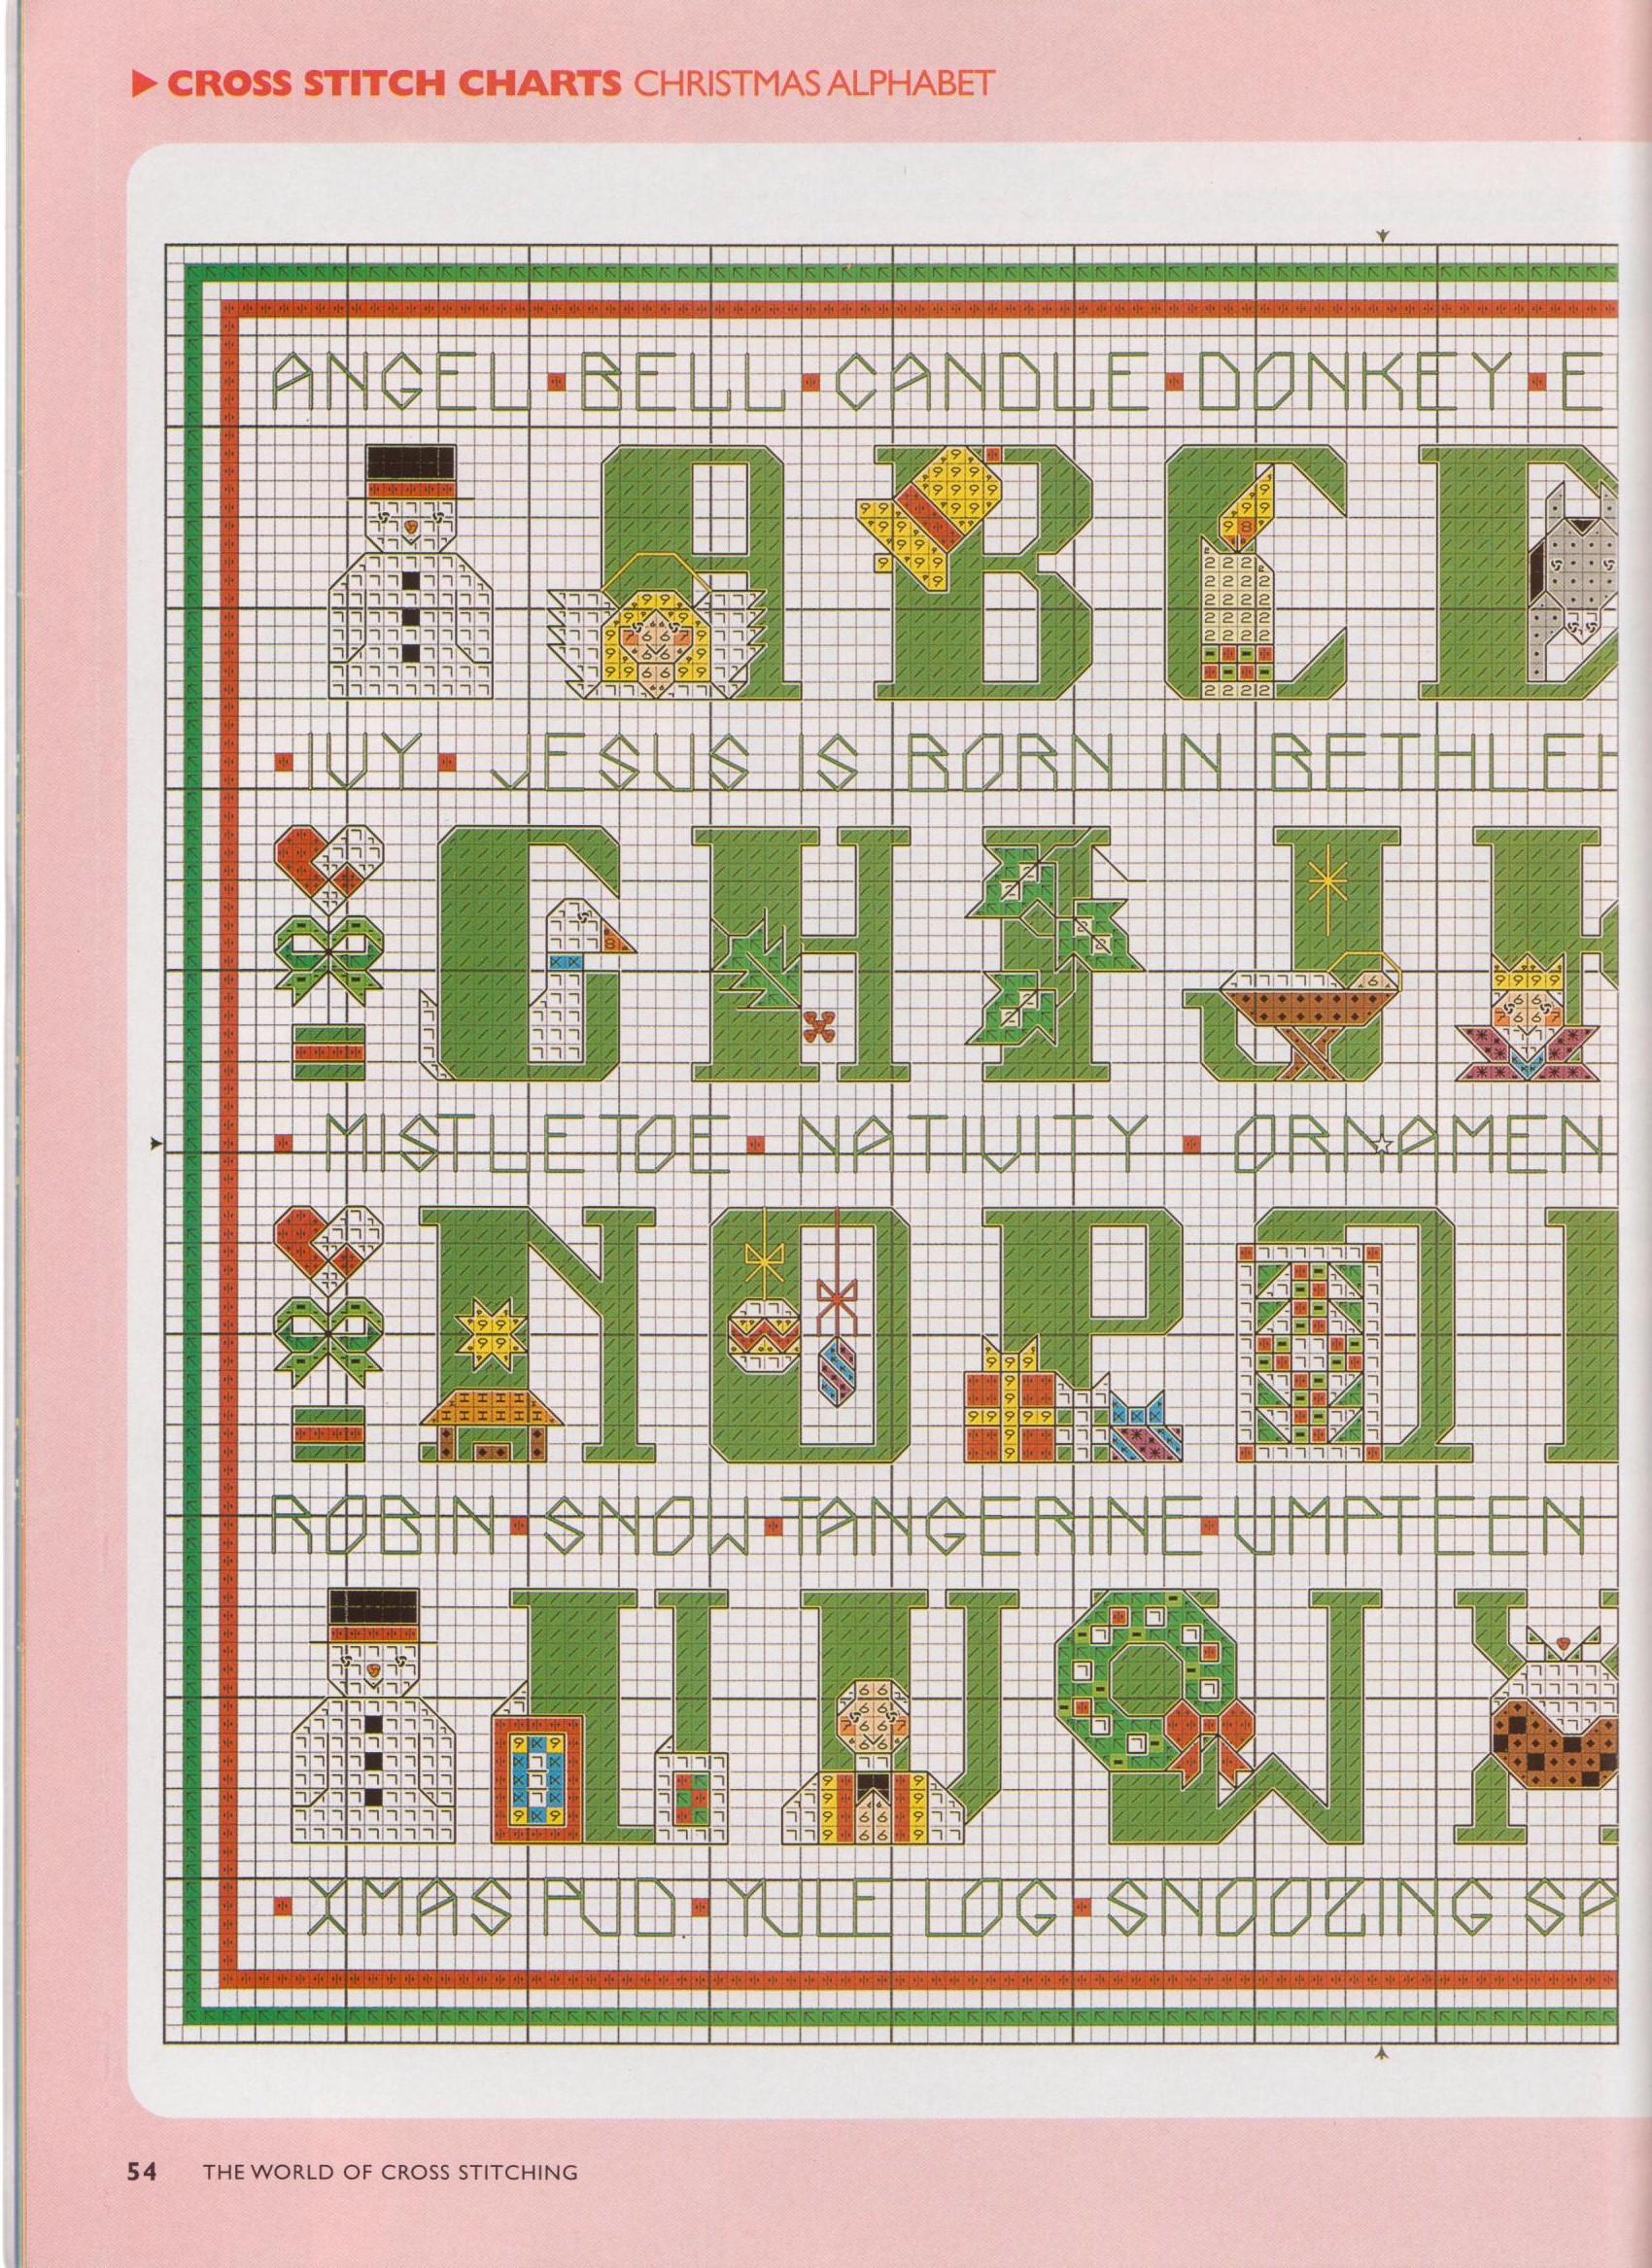 Cross stitch Christmas alphabet with Santa Claus snowmen and goblins (1)